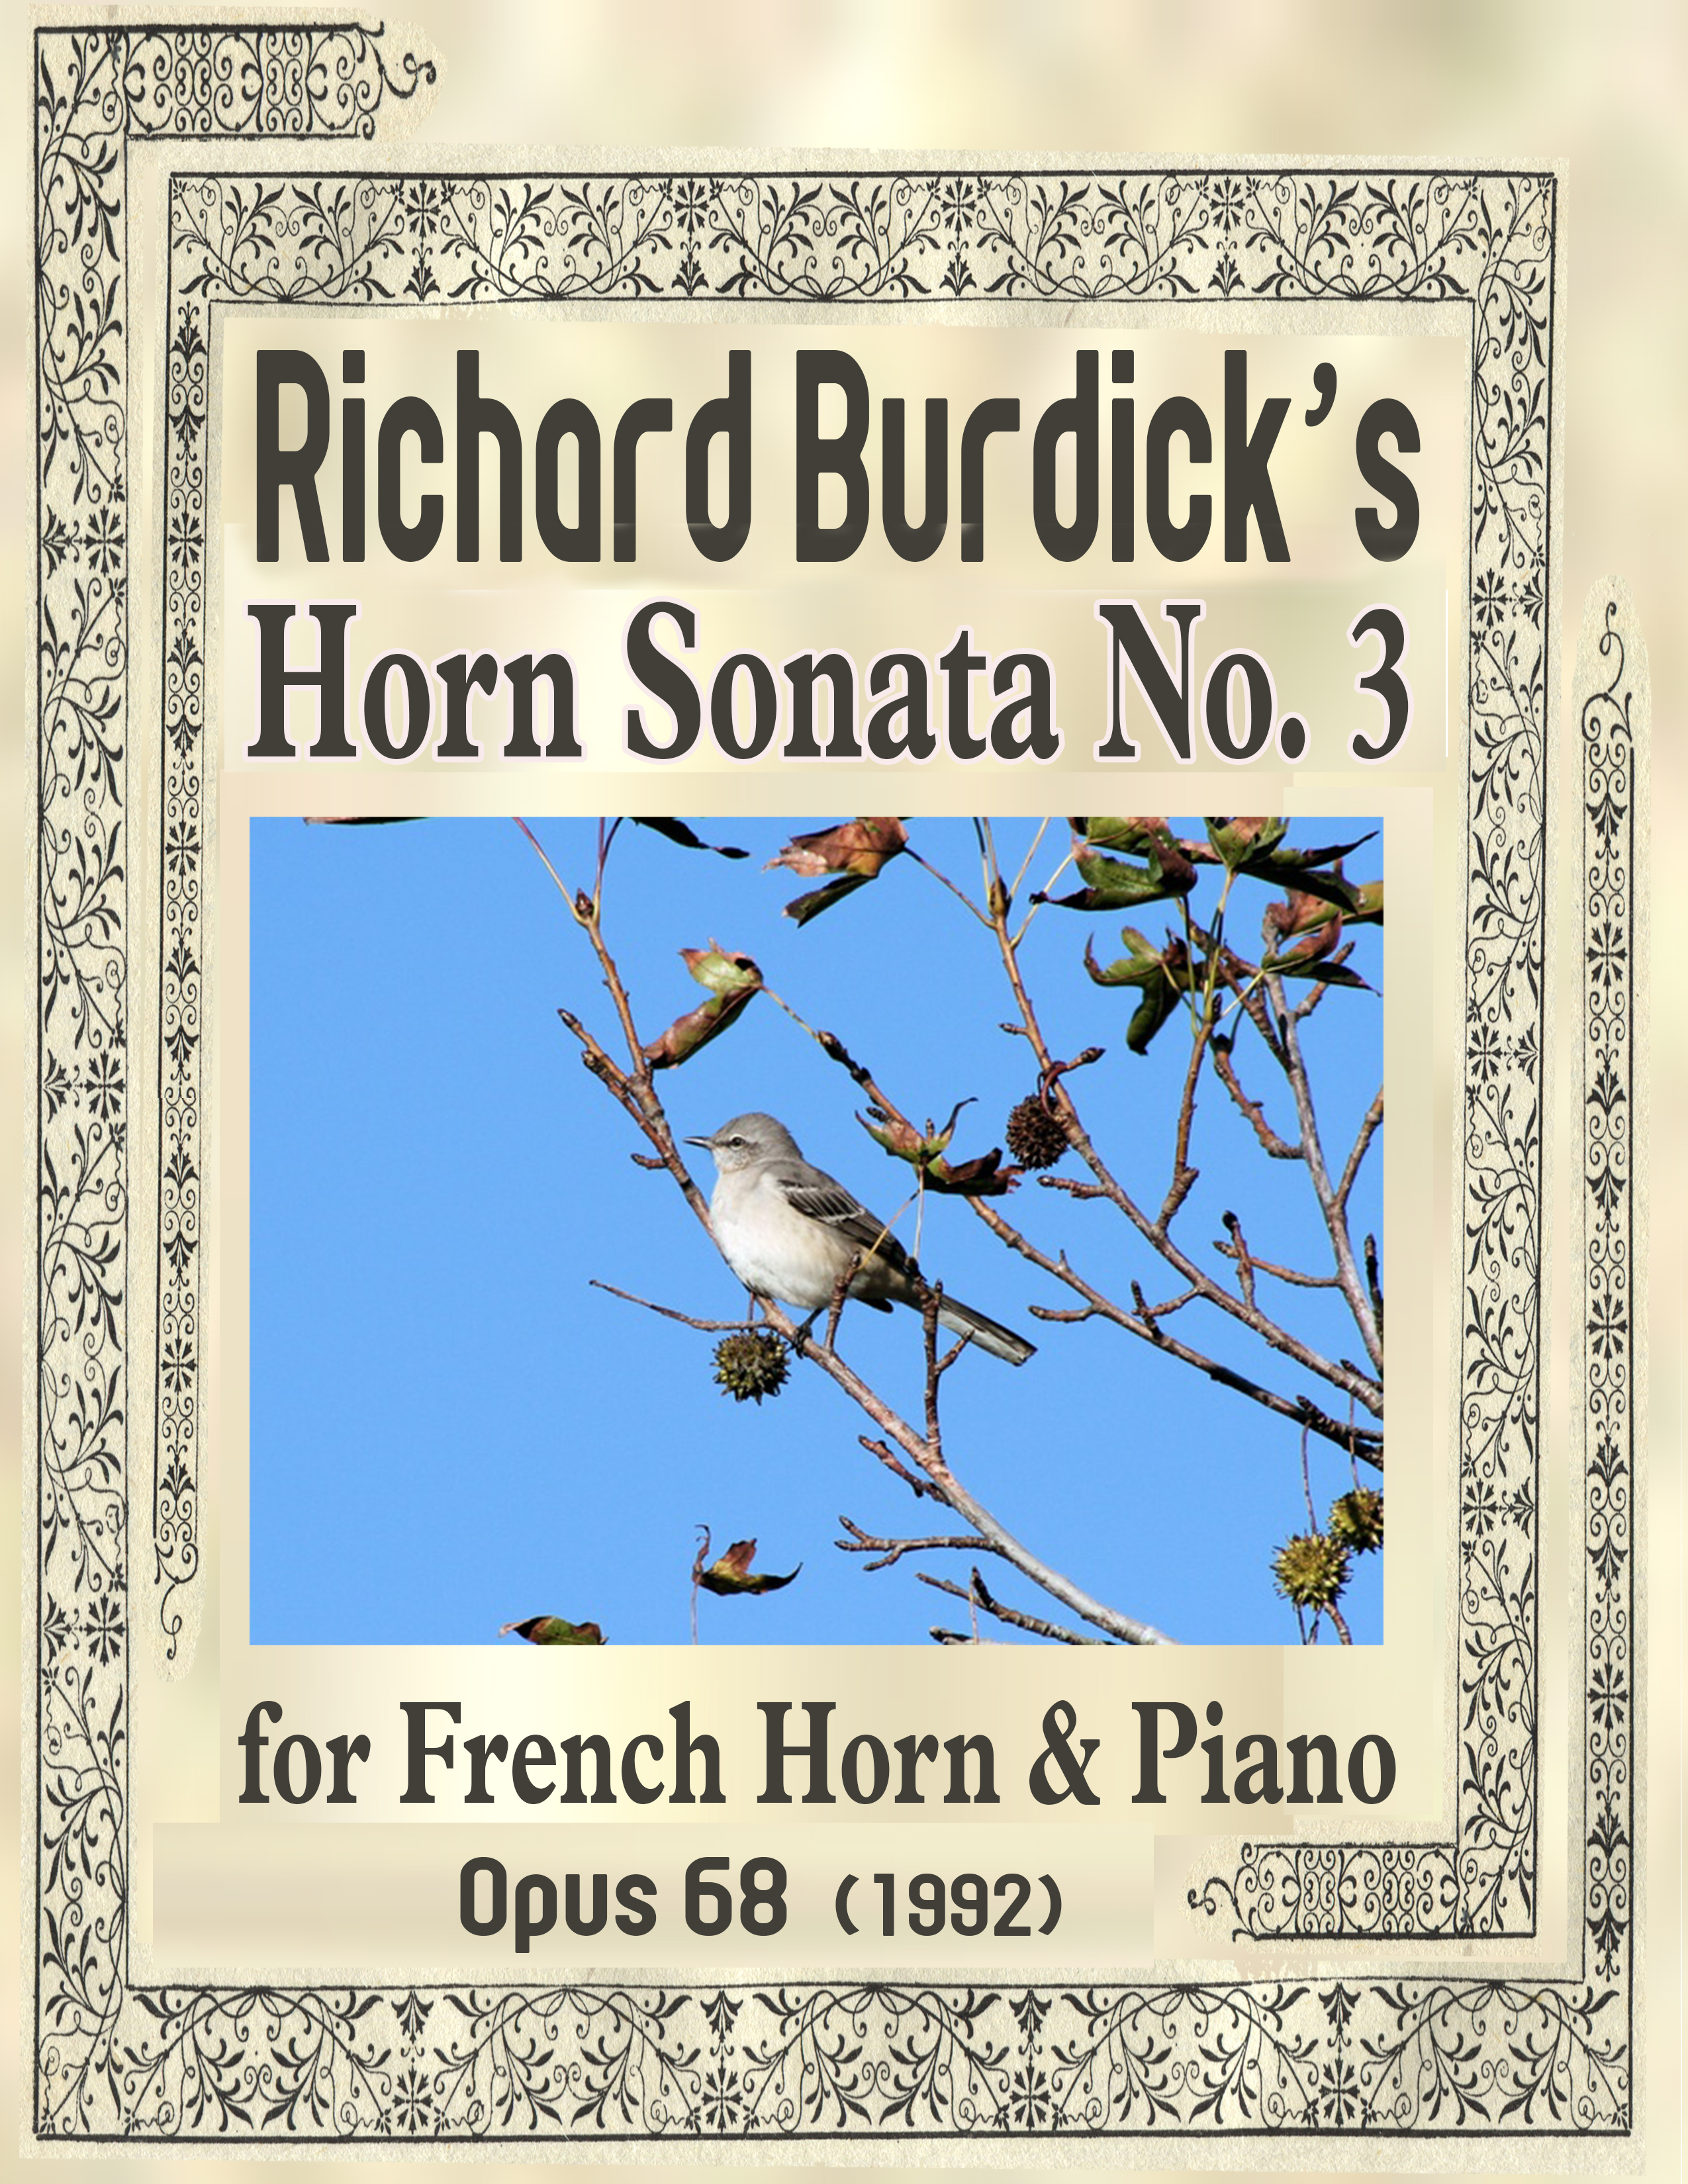 RIchard Burdick's sheet music cover for Mockingbird sonata, Op68